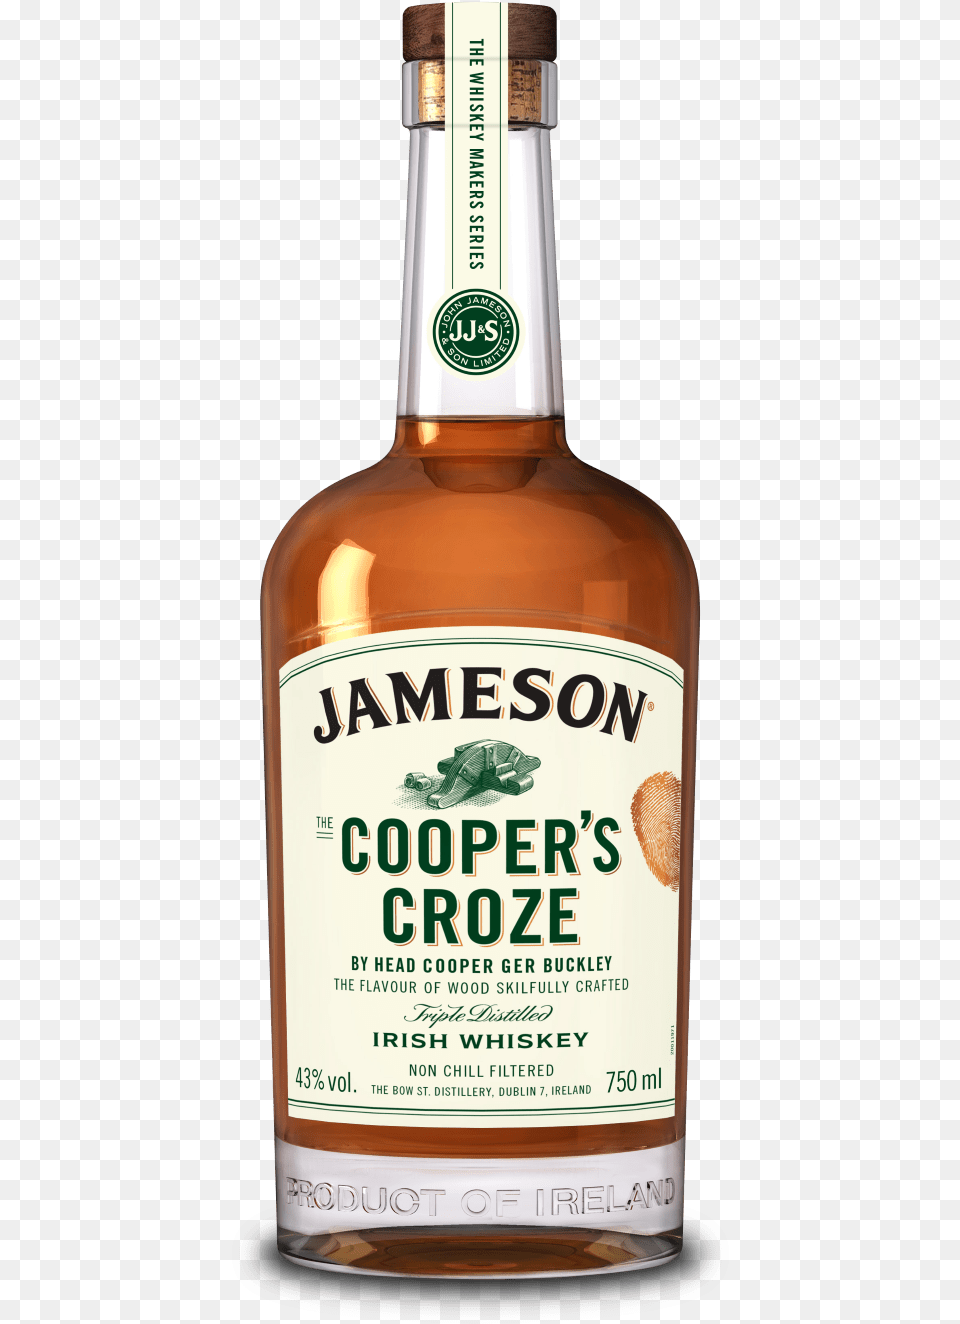 Coopers Croze Bottle Image 750ml Jameson Cooper Croze Whiskey, Alcohol, Beverage, Liquor, Beer Png